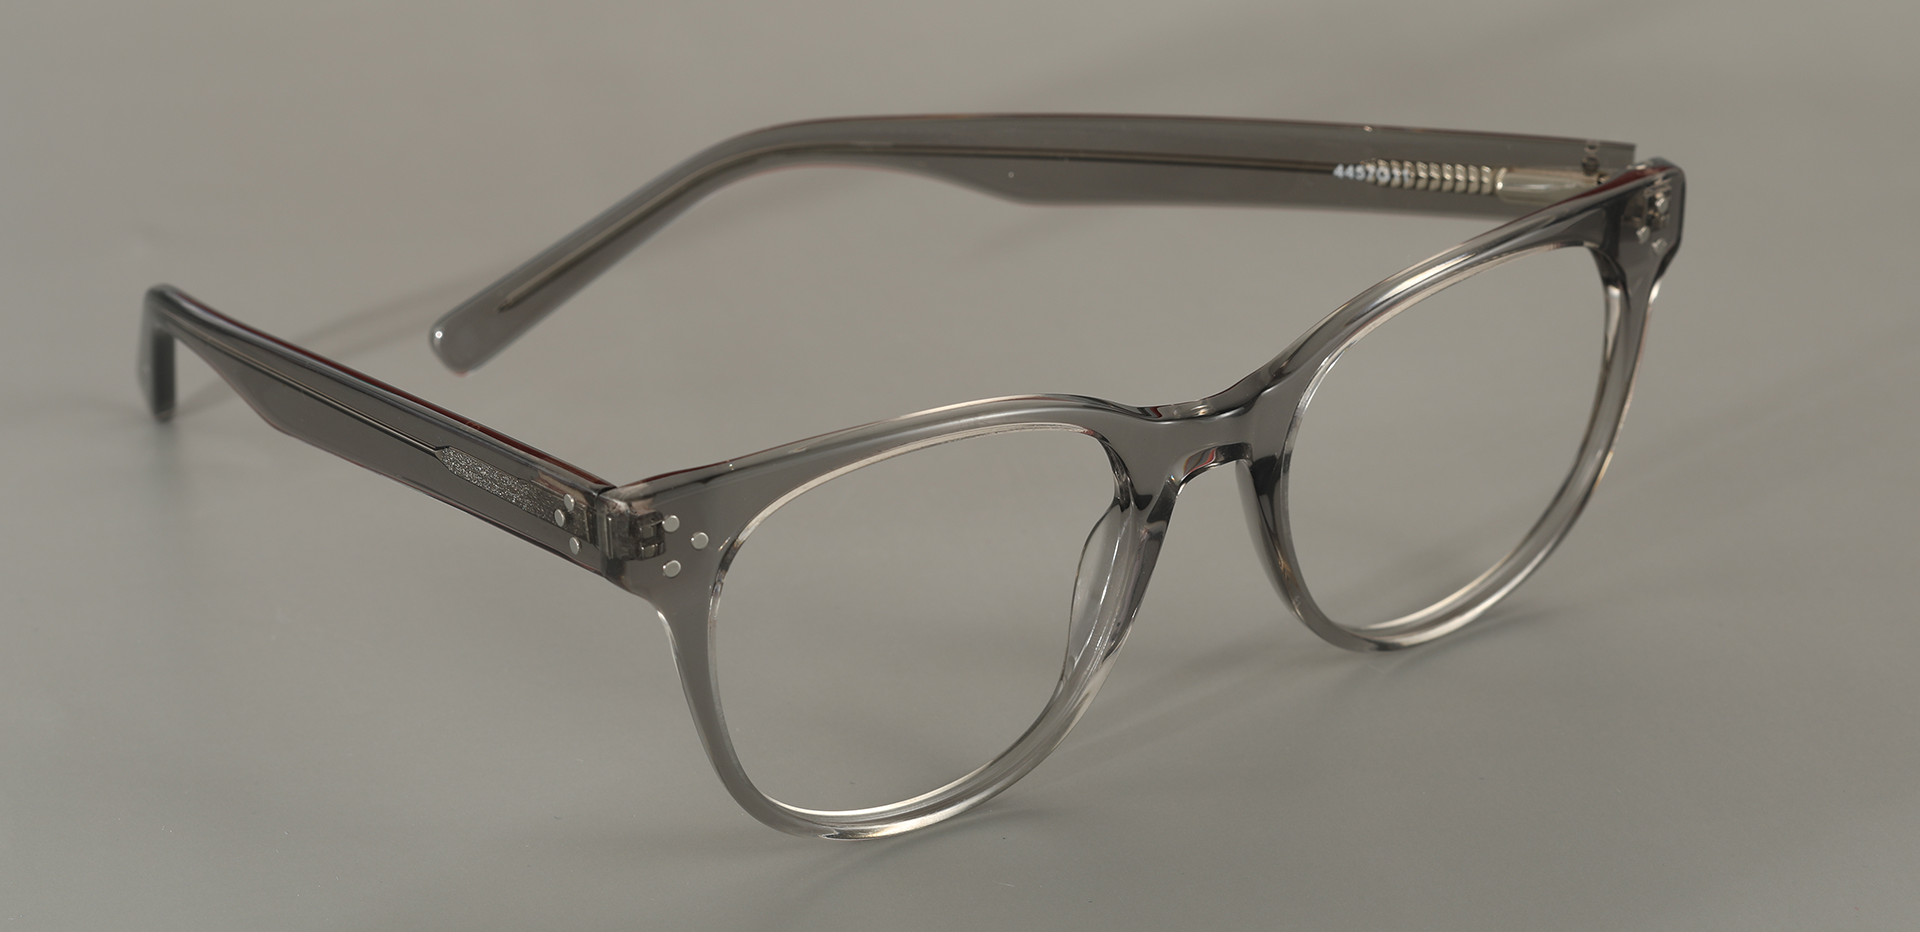 Orwell Oval Progressive Glasses - Gray